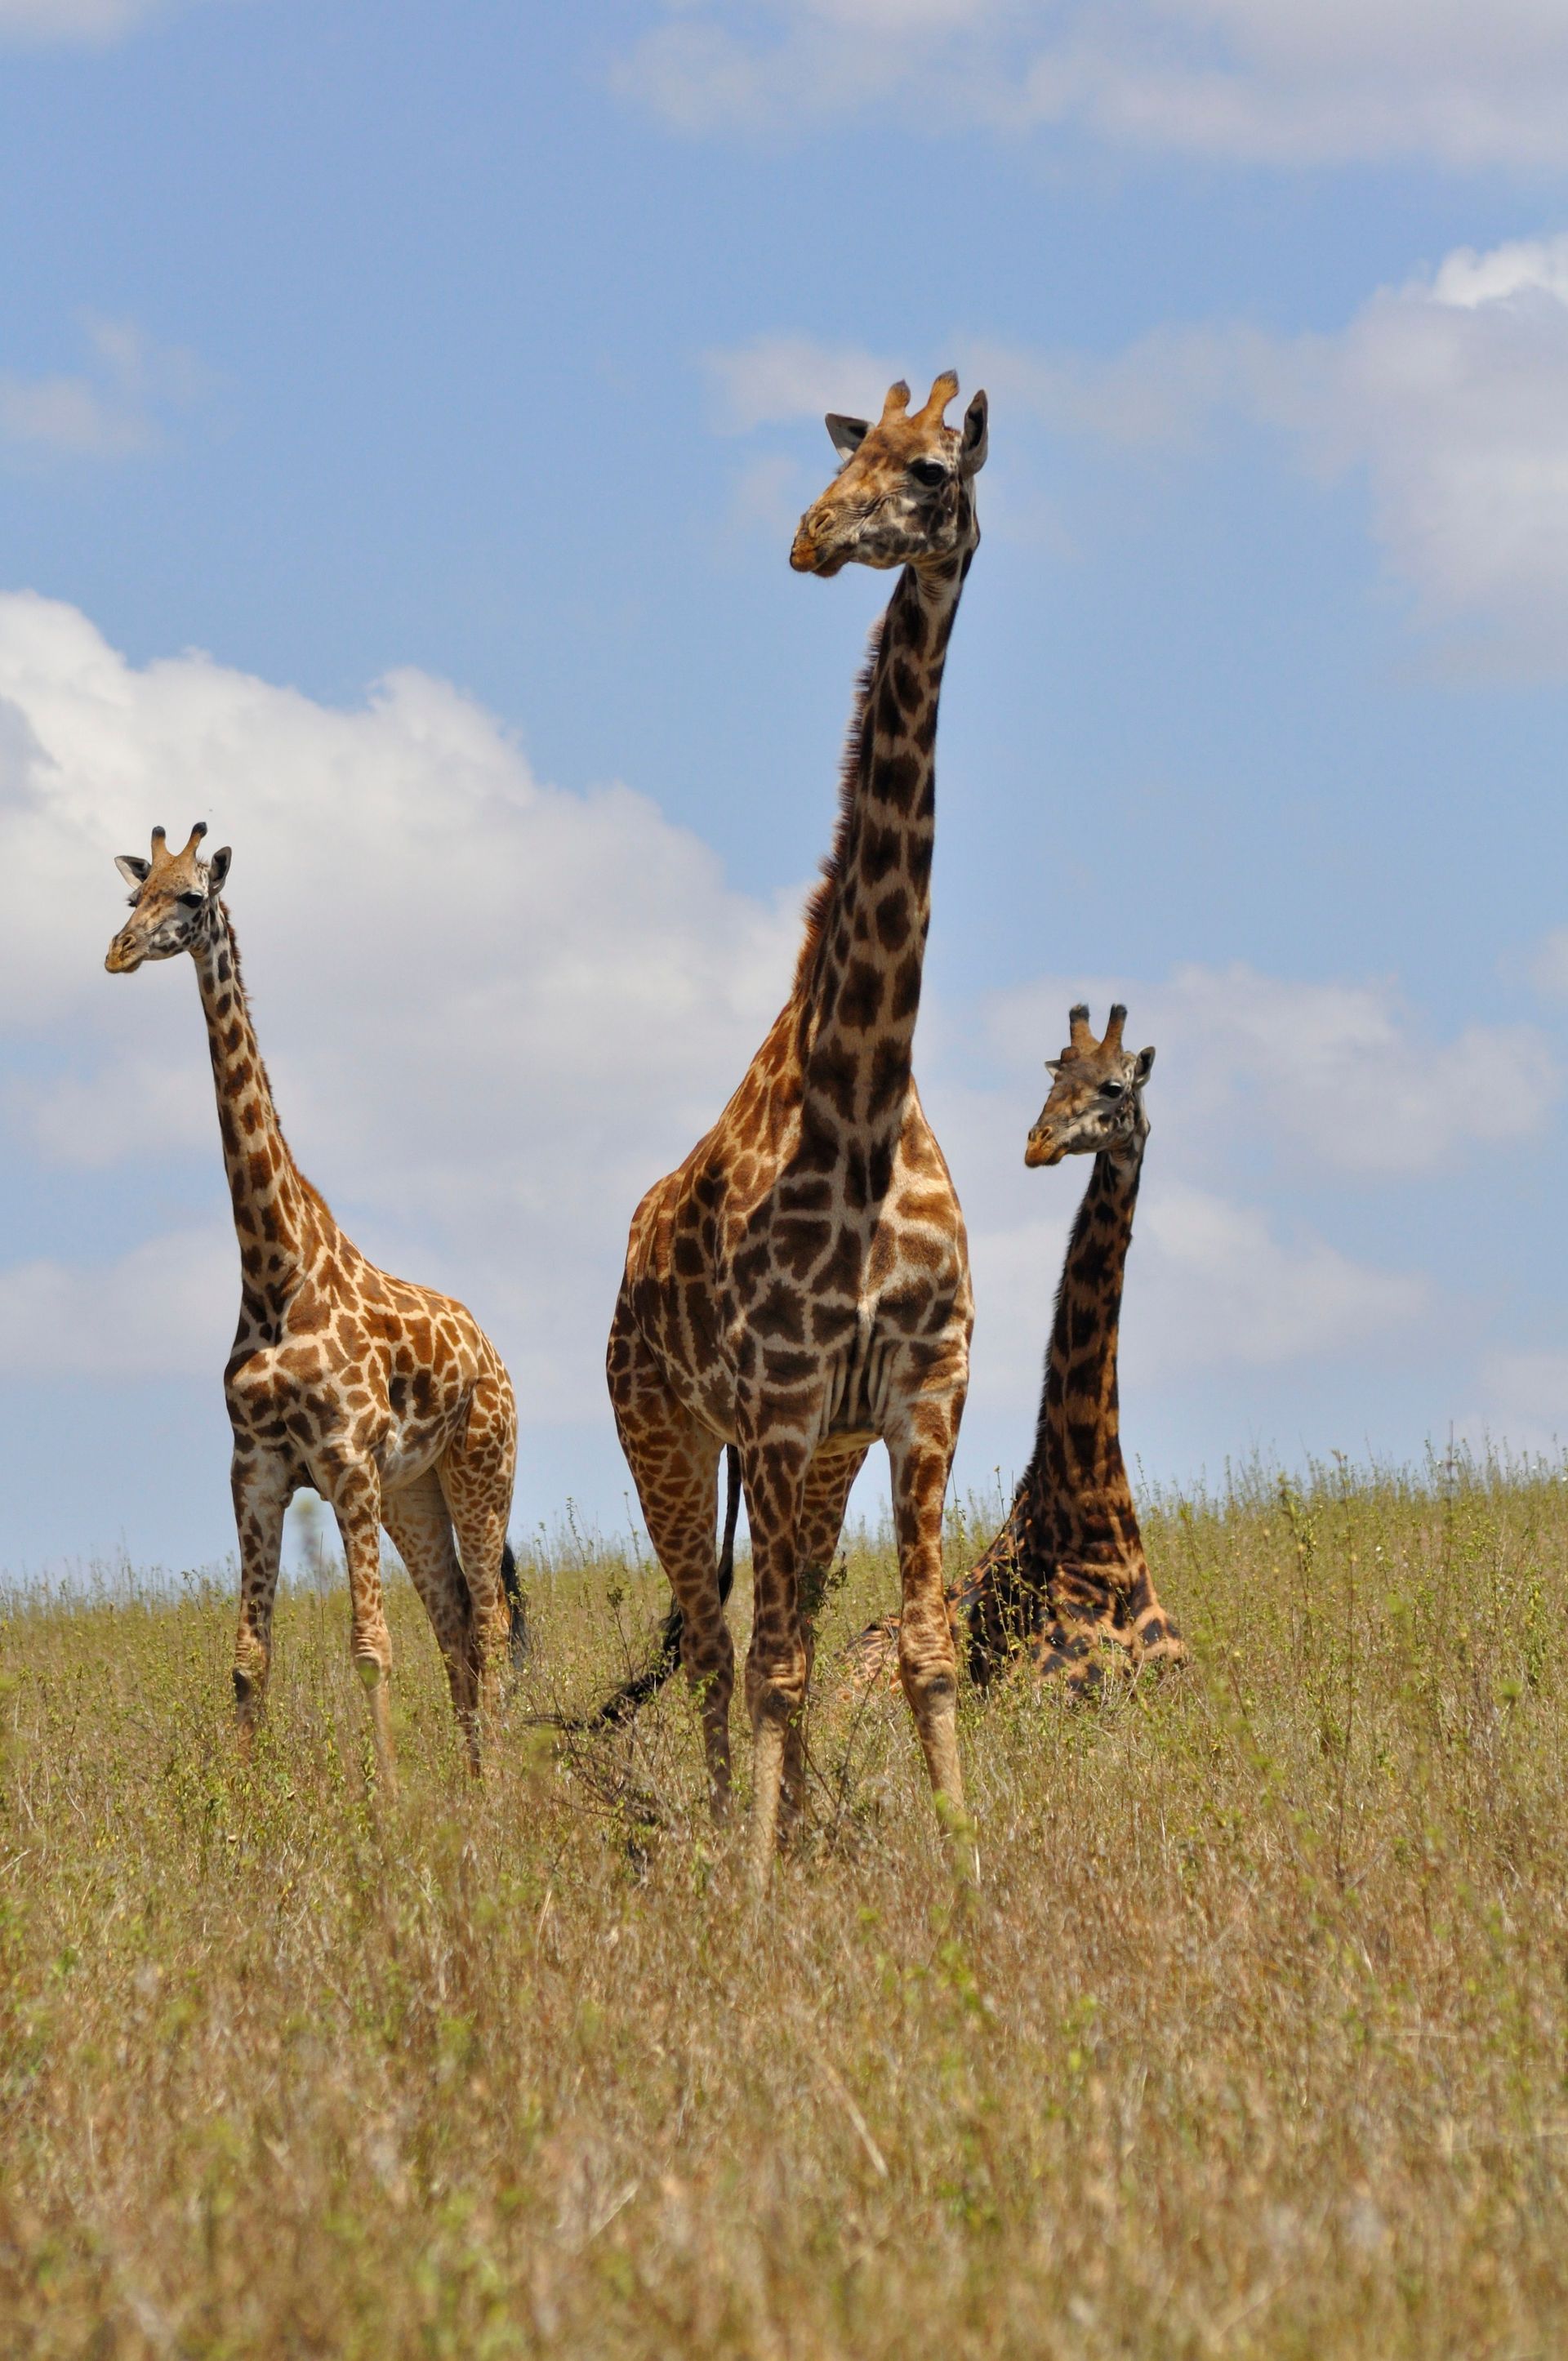 Three giraffes in a field.  